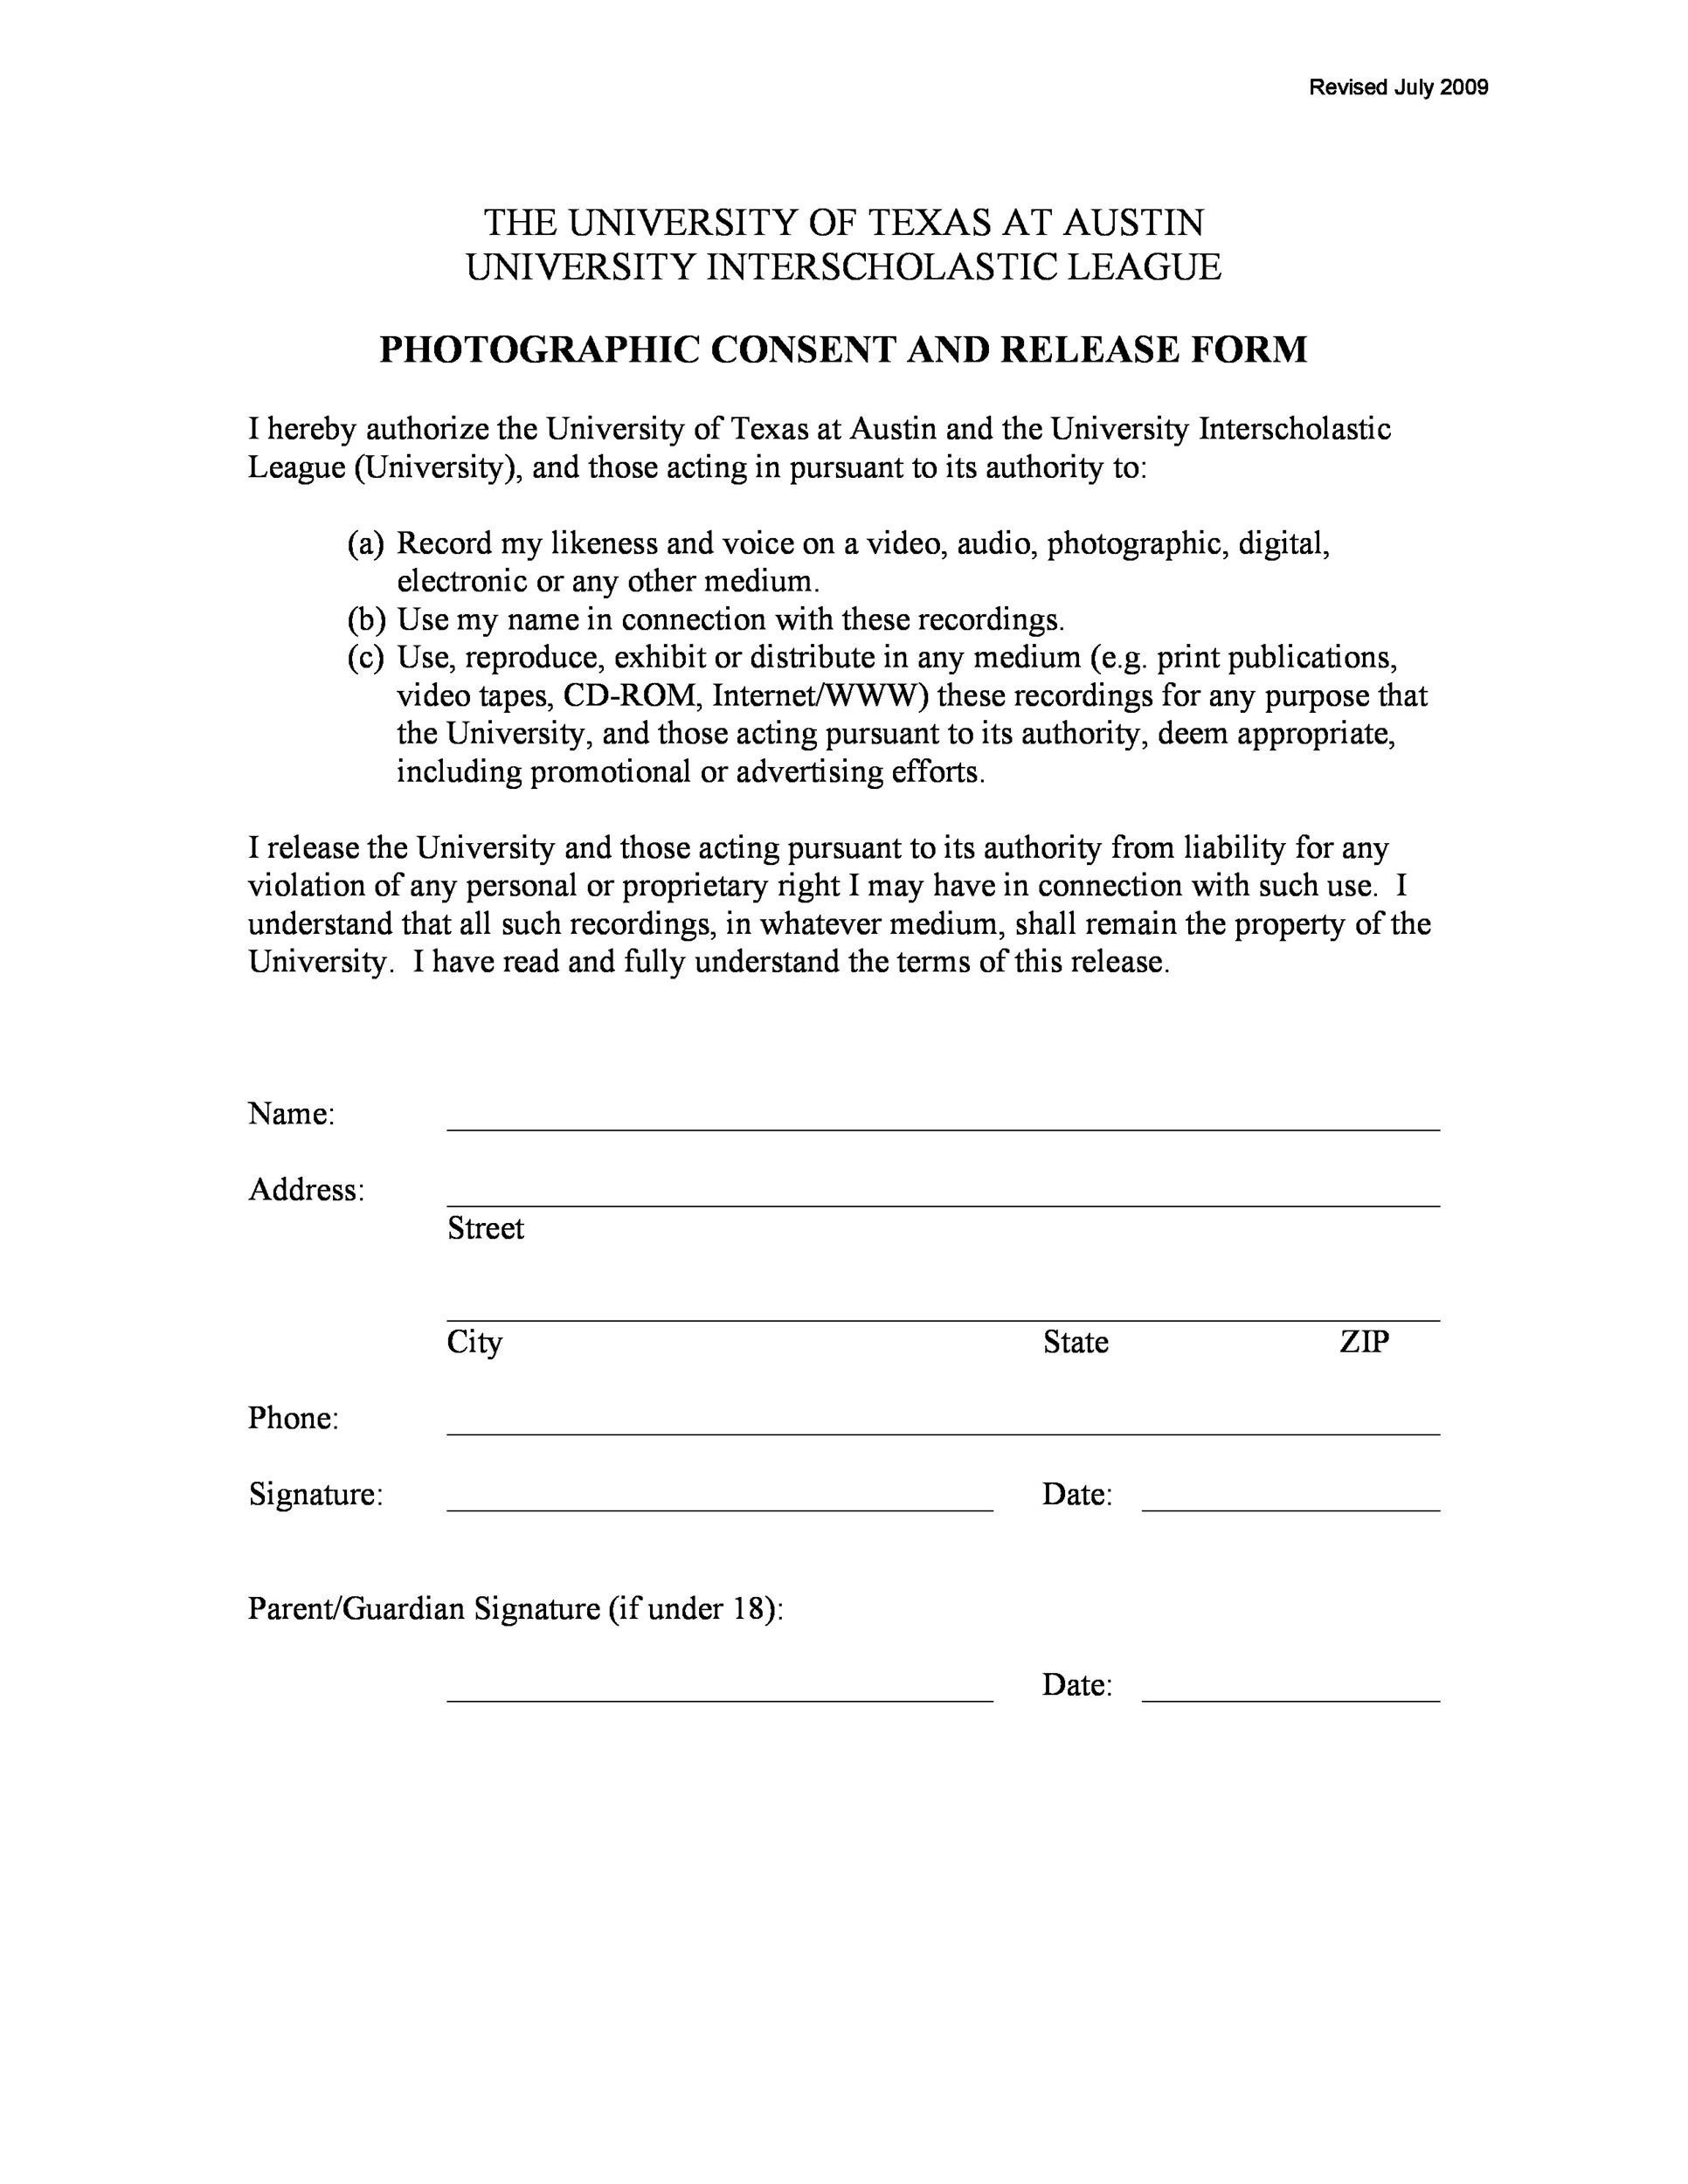 53 FREE Photo Release Form Templates Word PDF ᐅ TemplateLab